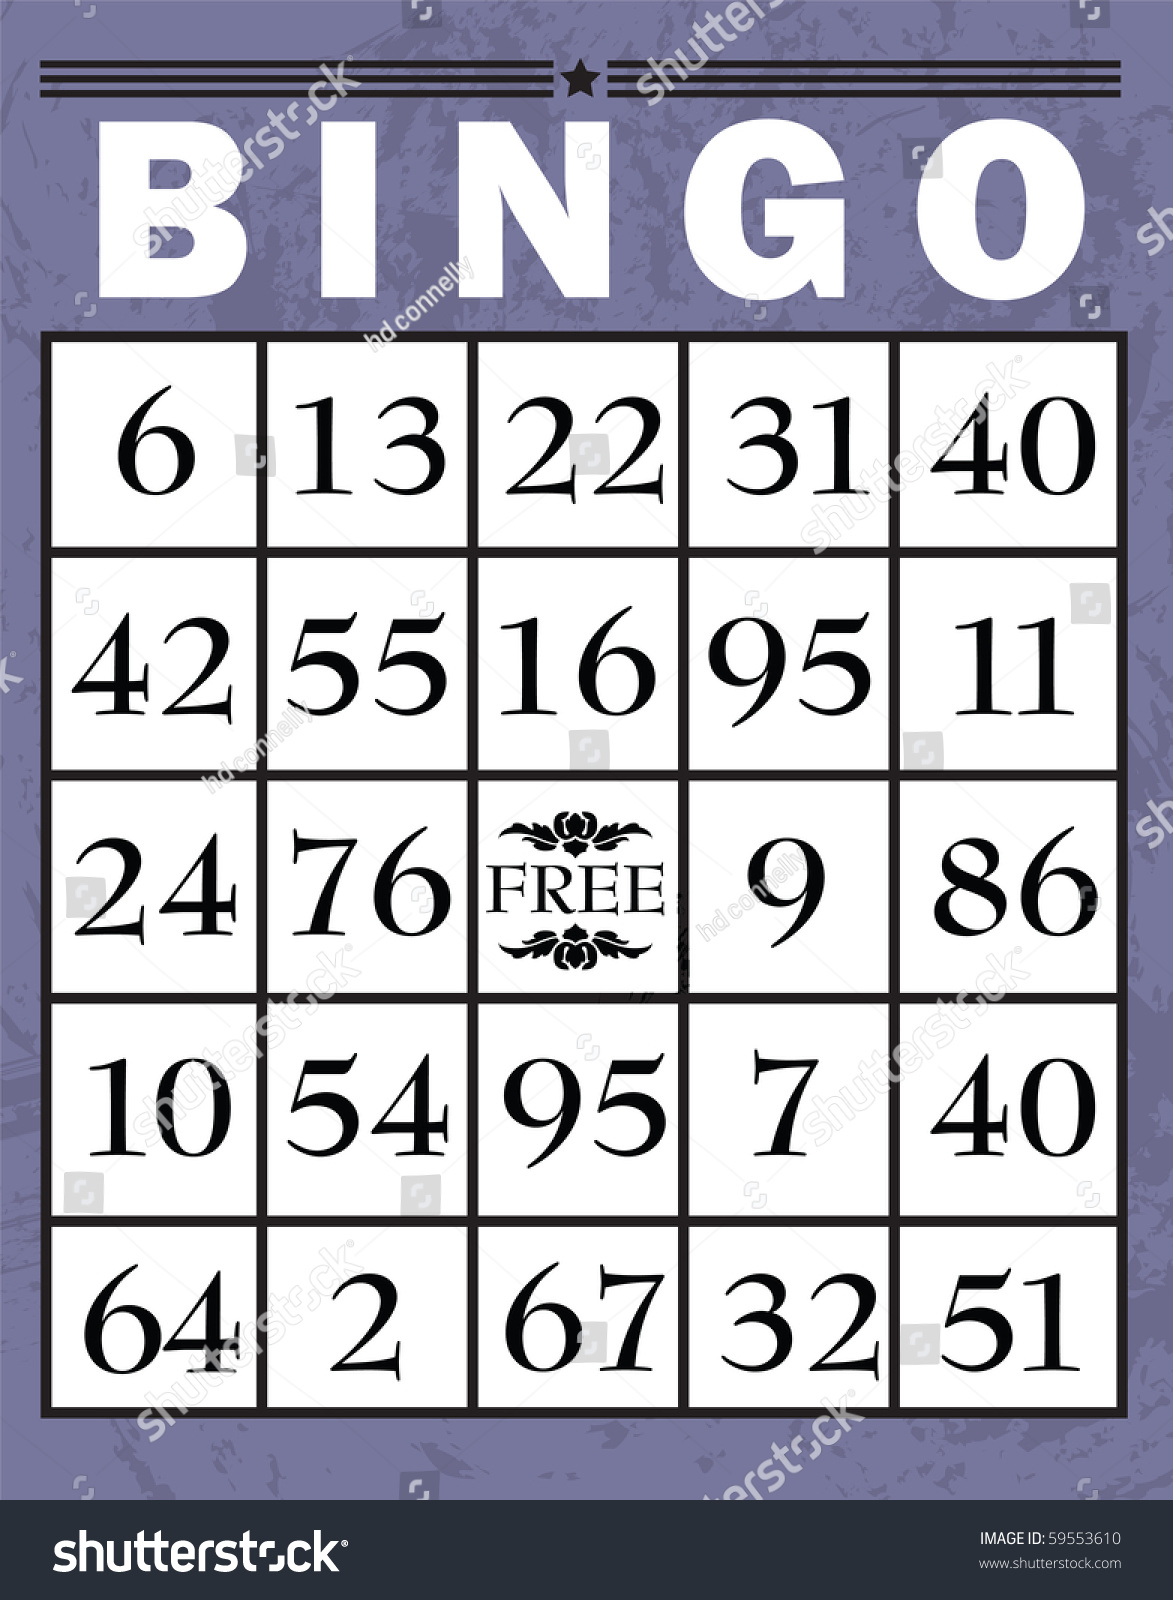 free bingo clipart downloads - photo #39